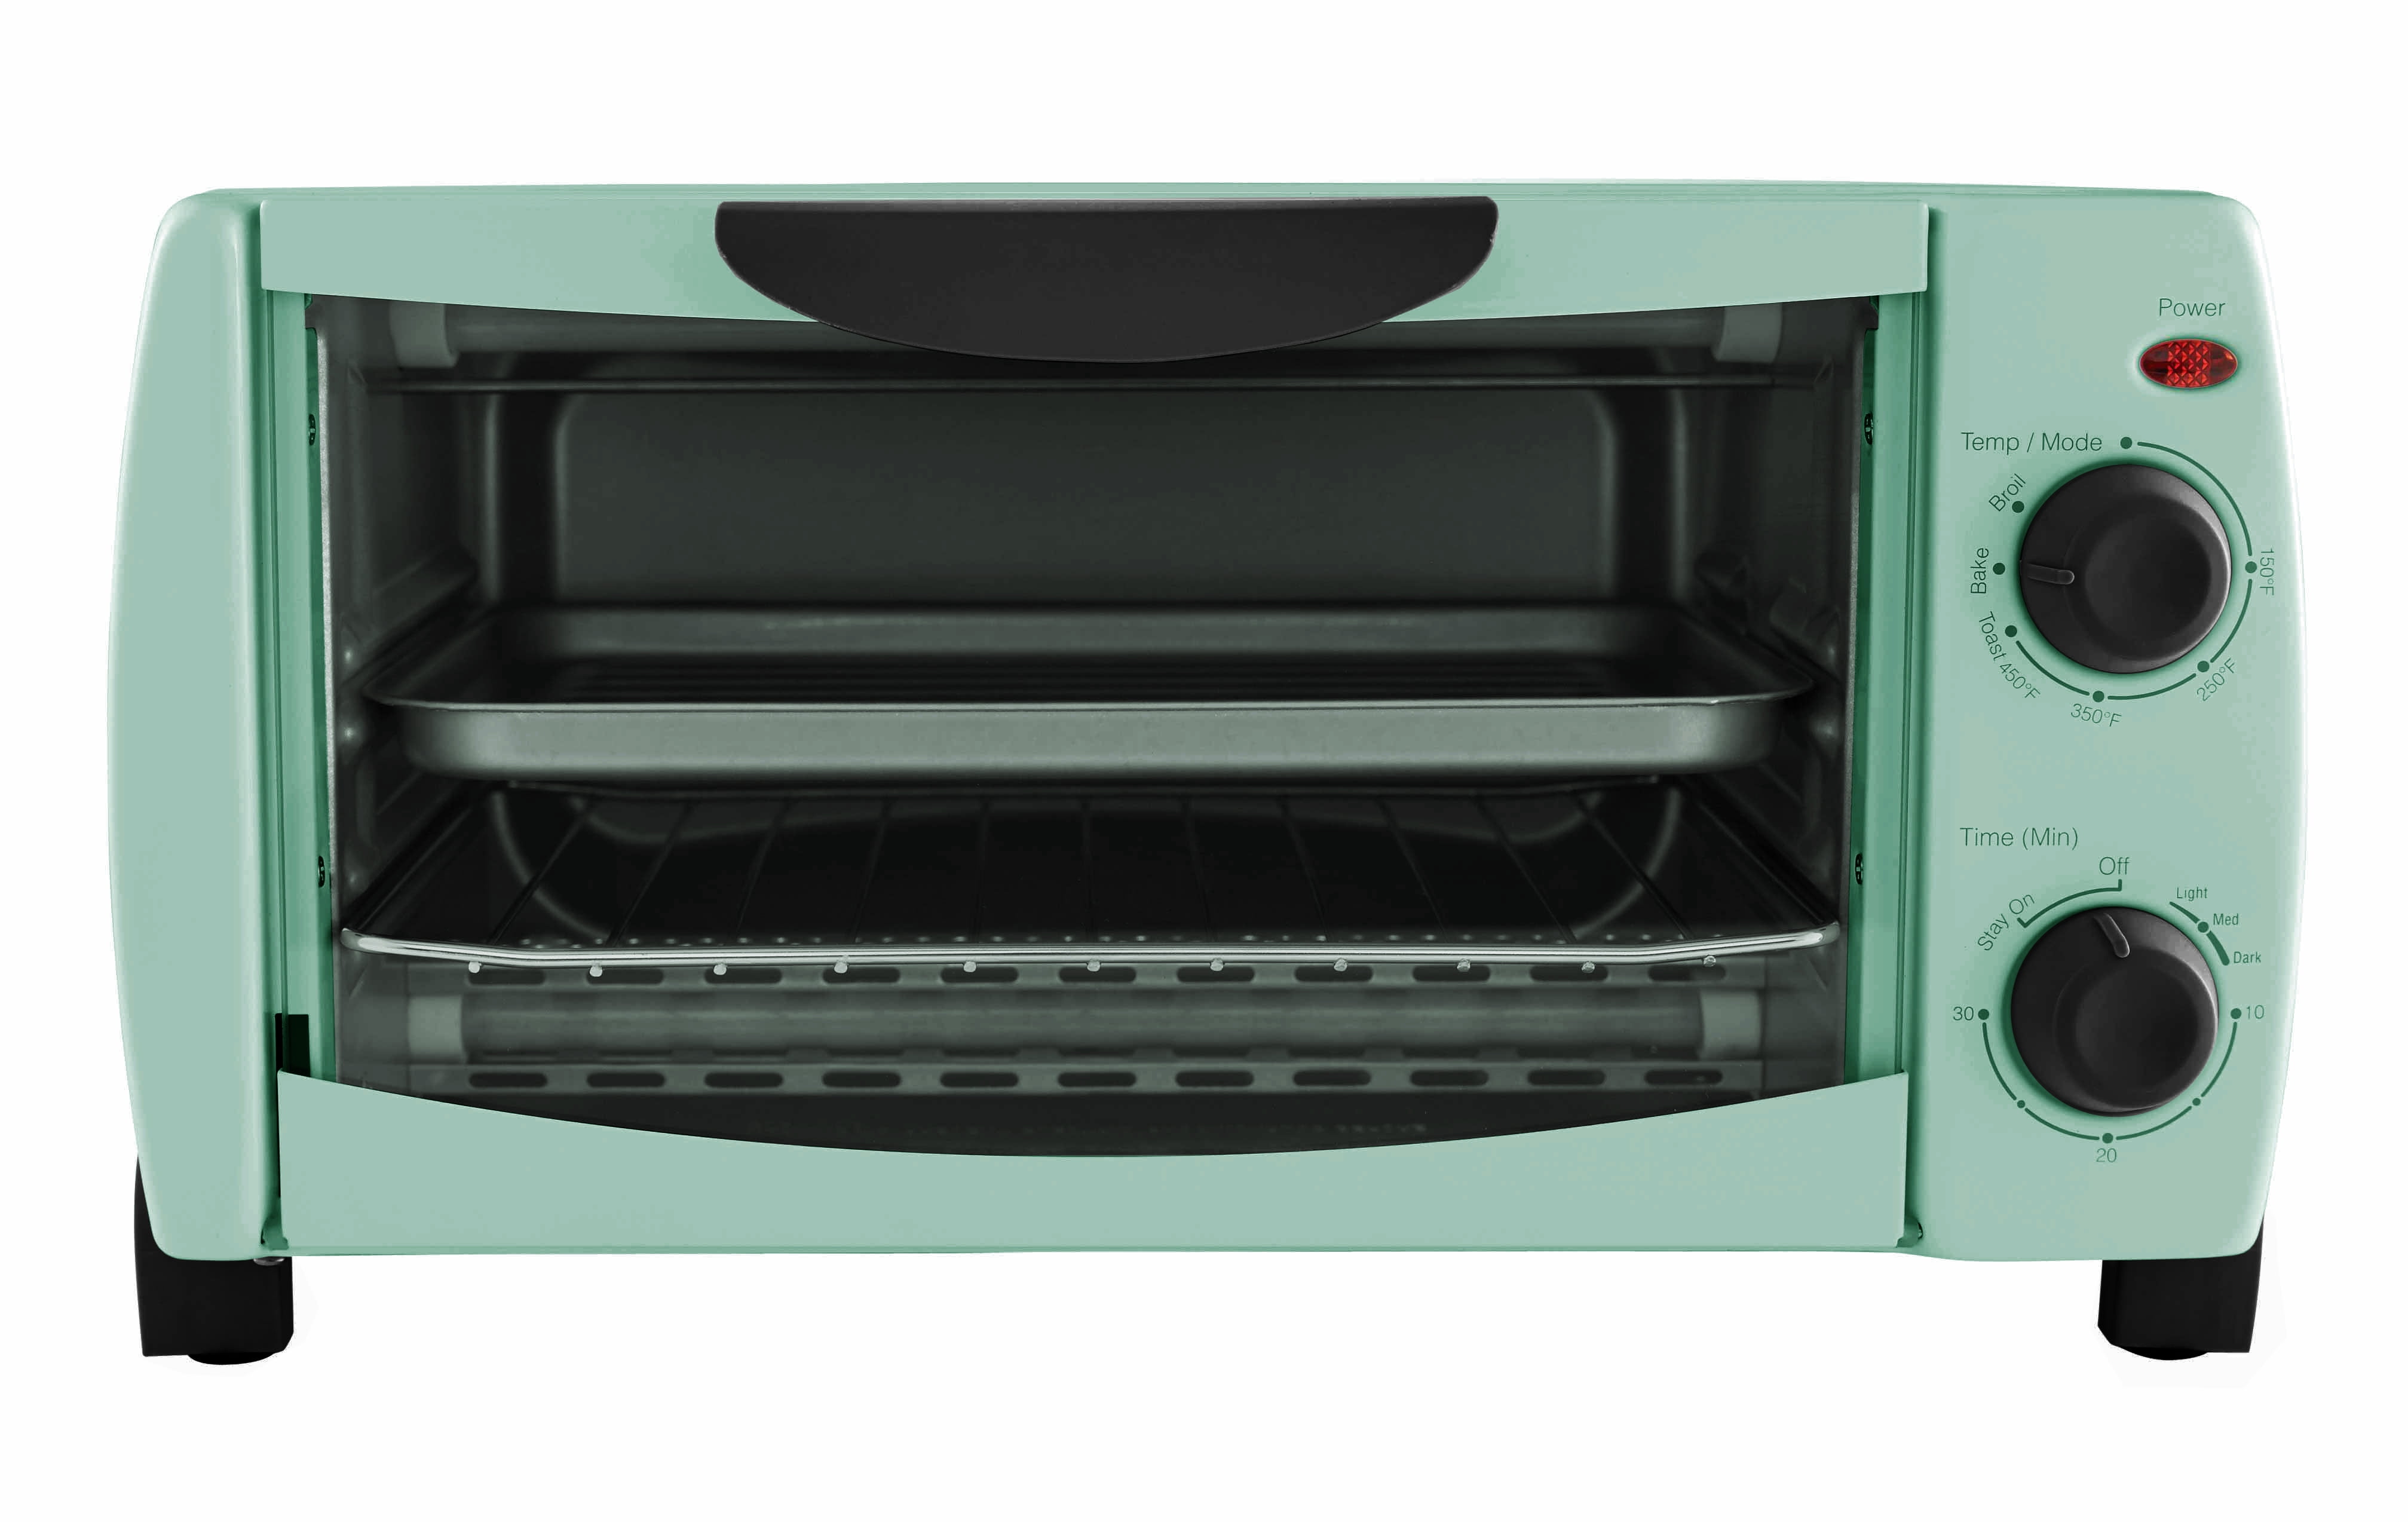 Mainstays 4-Slice Toaster Oven, Classic Mint - Walmart.com